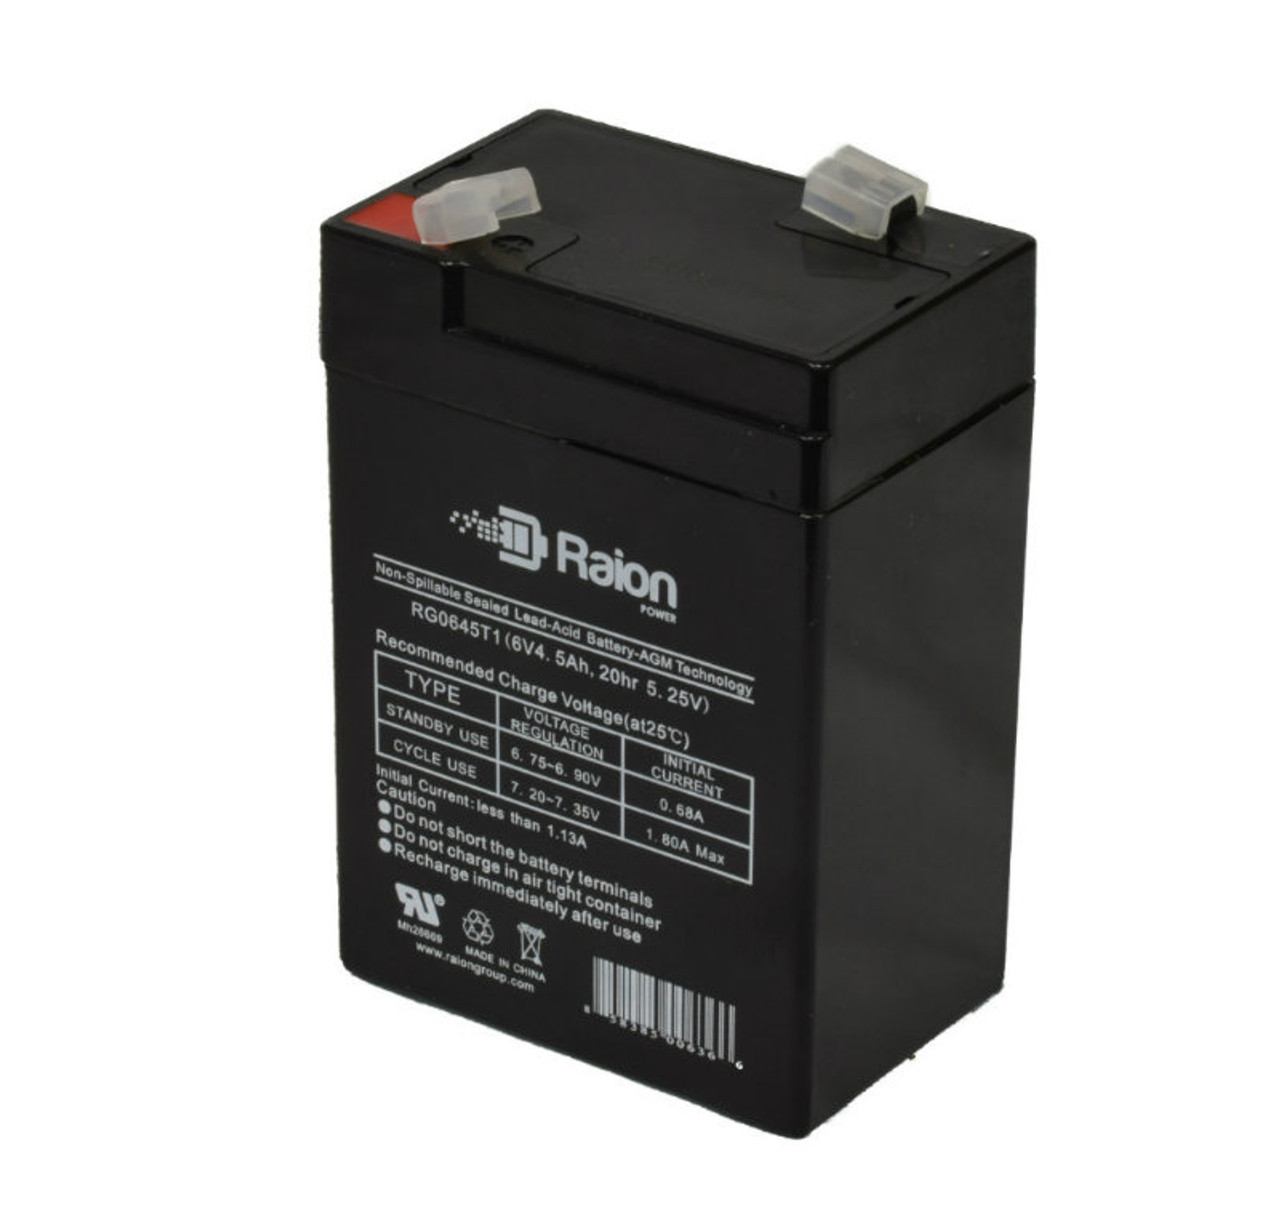 Raion Power RG0645T1 6V 4.5Ah Replacement Battery Cartridge for Sonnenschein A206/4